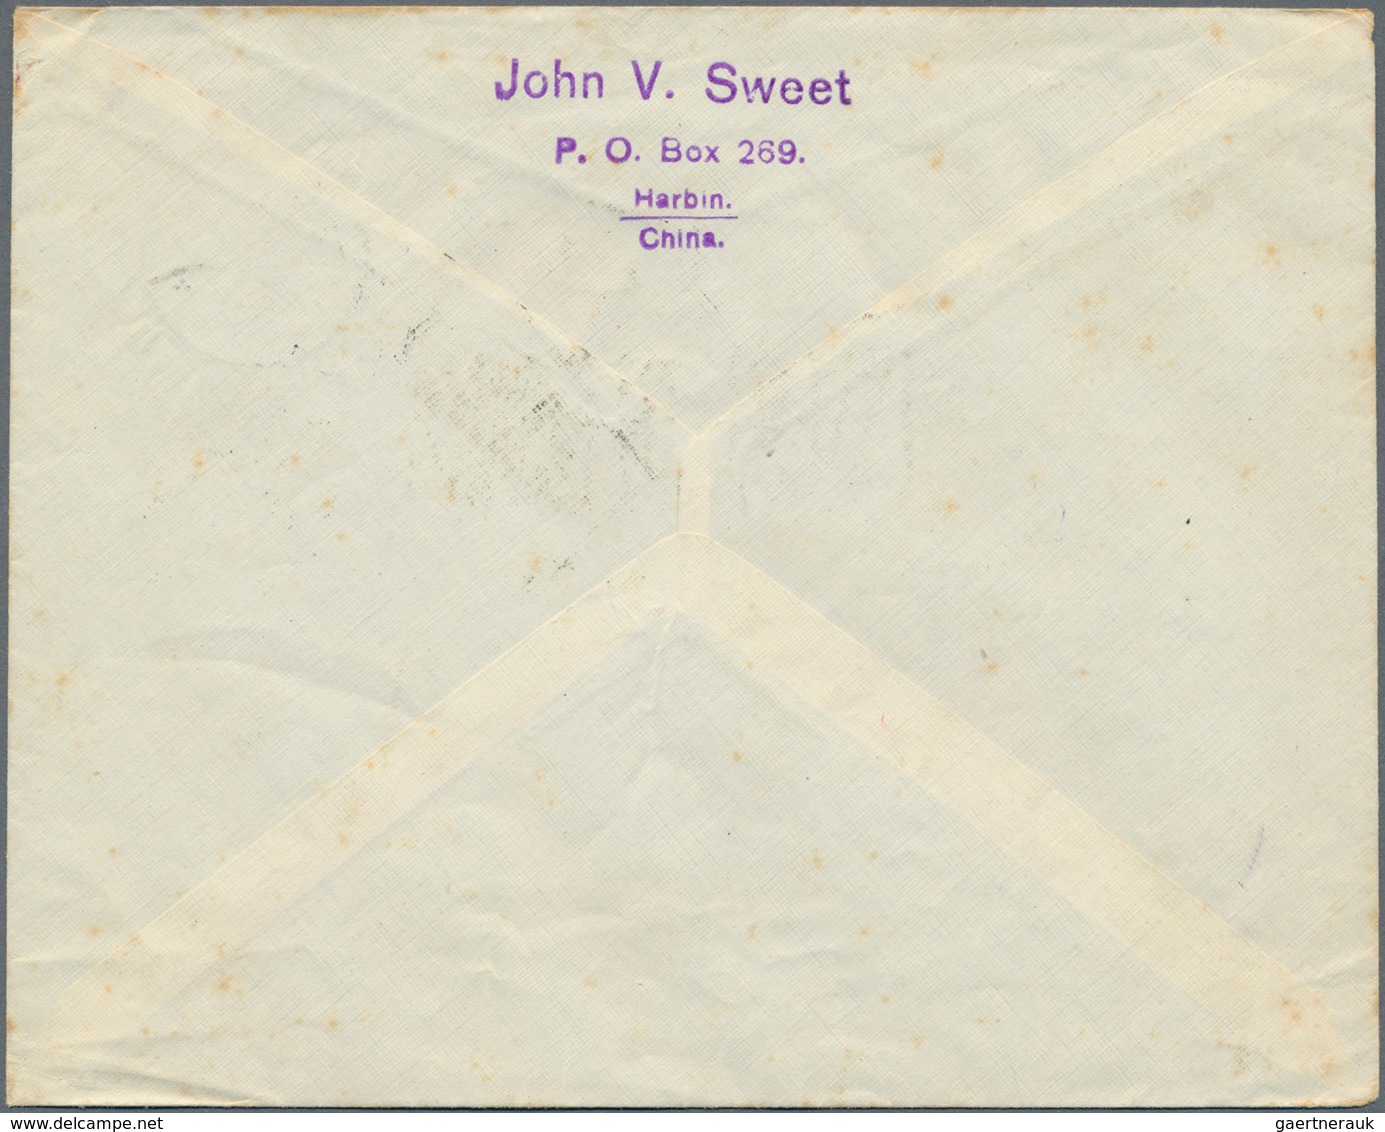 Japanische Post In China: 1928. Air Mail Envelope (stains.) Addressed To Harbin, Manchuria Bearing J - 1943-45 Shanghai & Nanjing